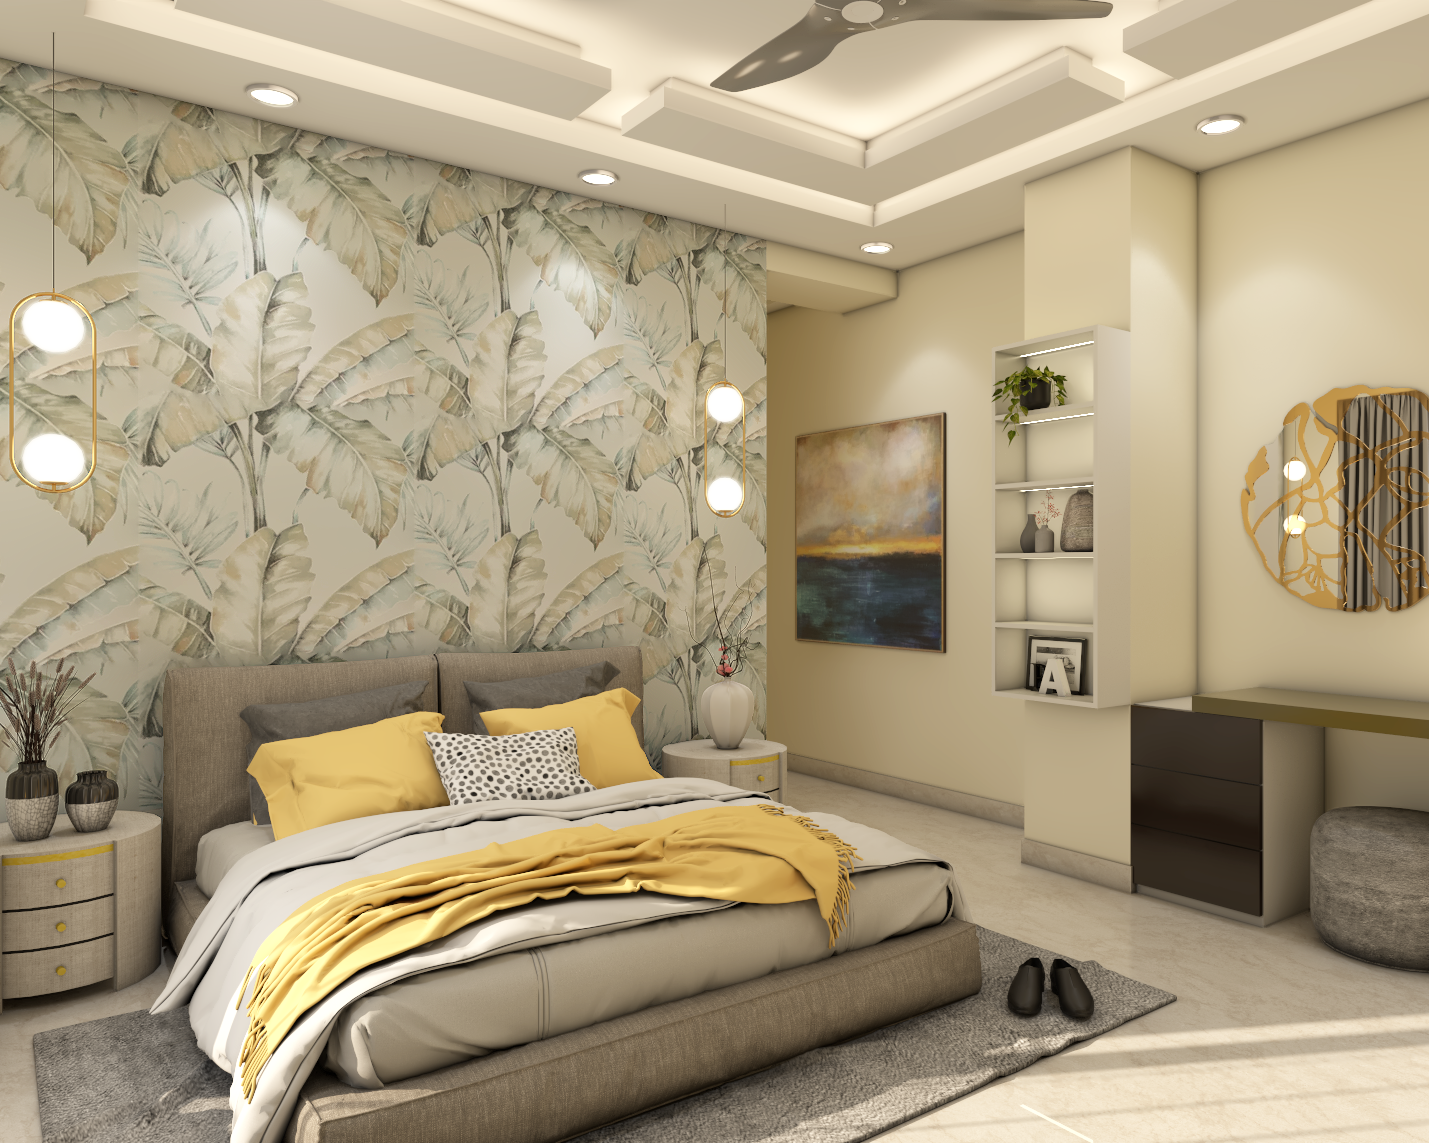 Modern Bedroom Design With Grey Platform Bed And Nature-Inspired ...